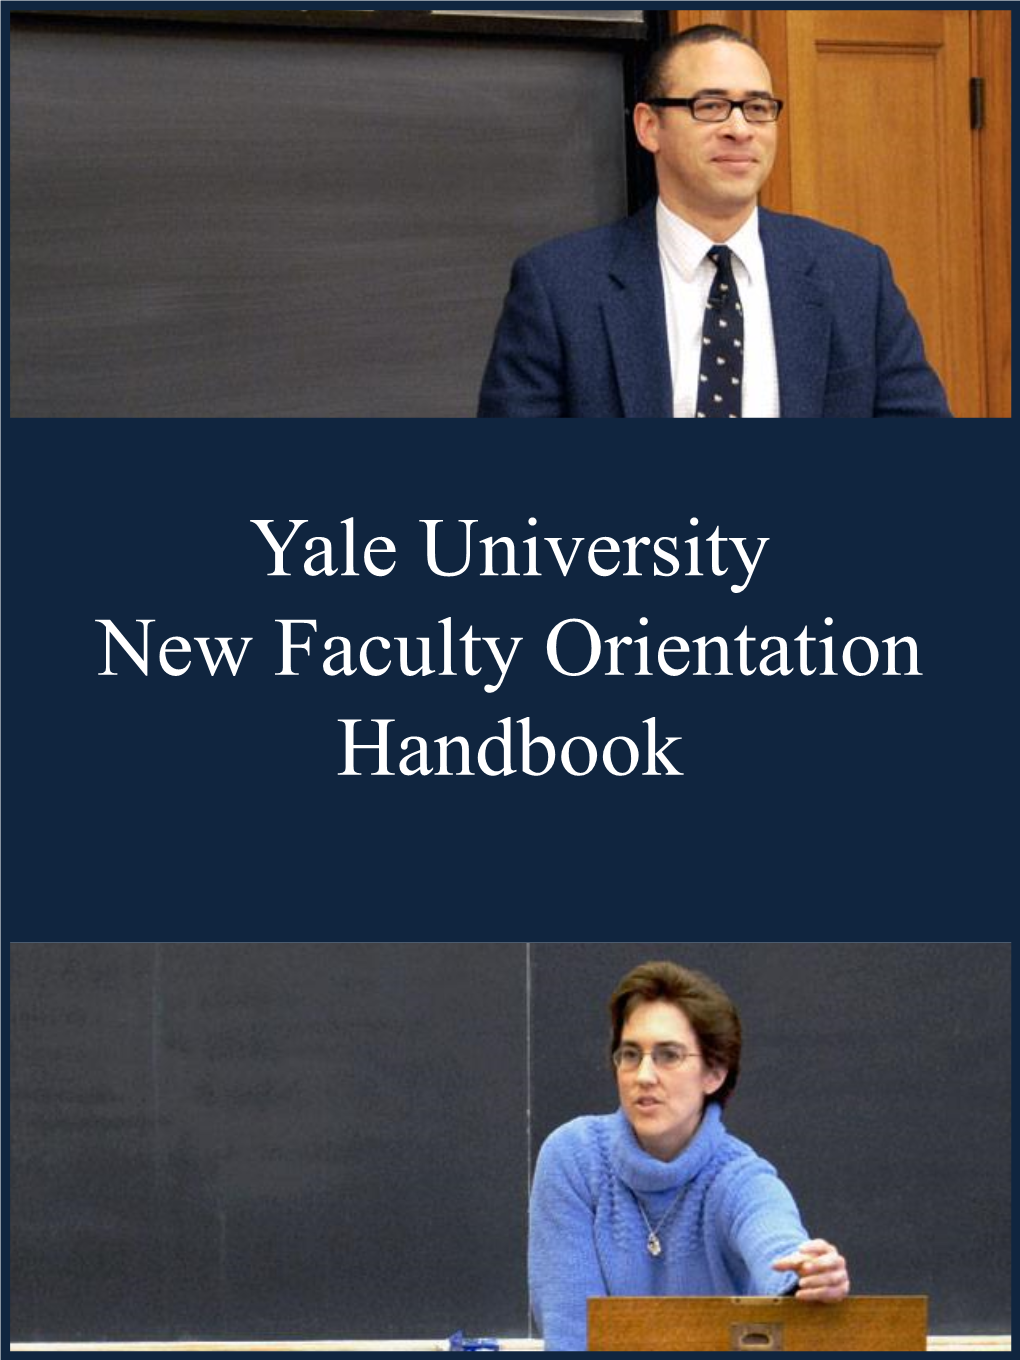 Yale University New Faculty Orientation Handbook Contents